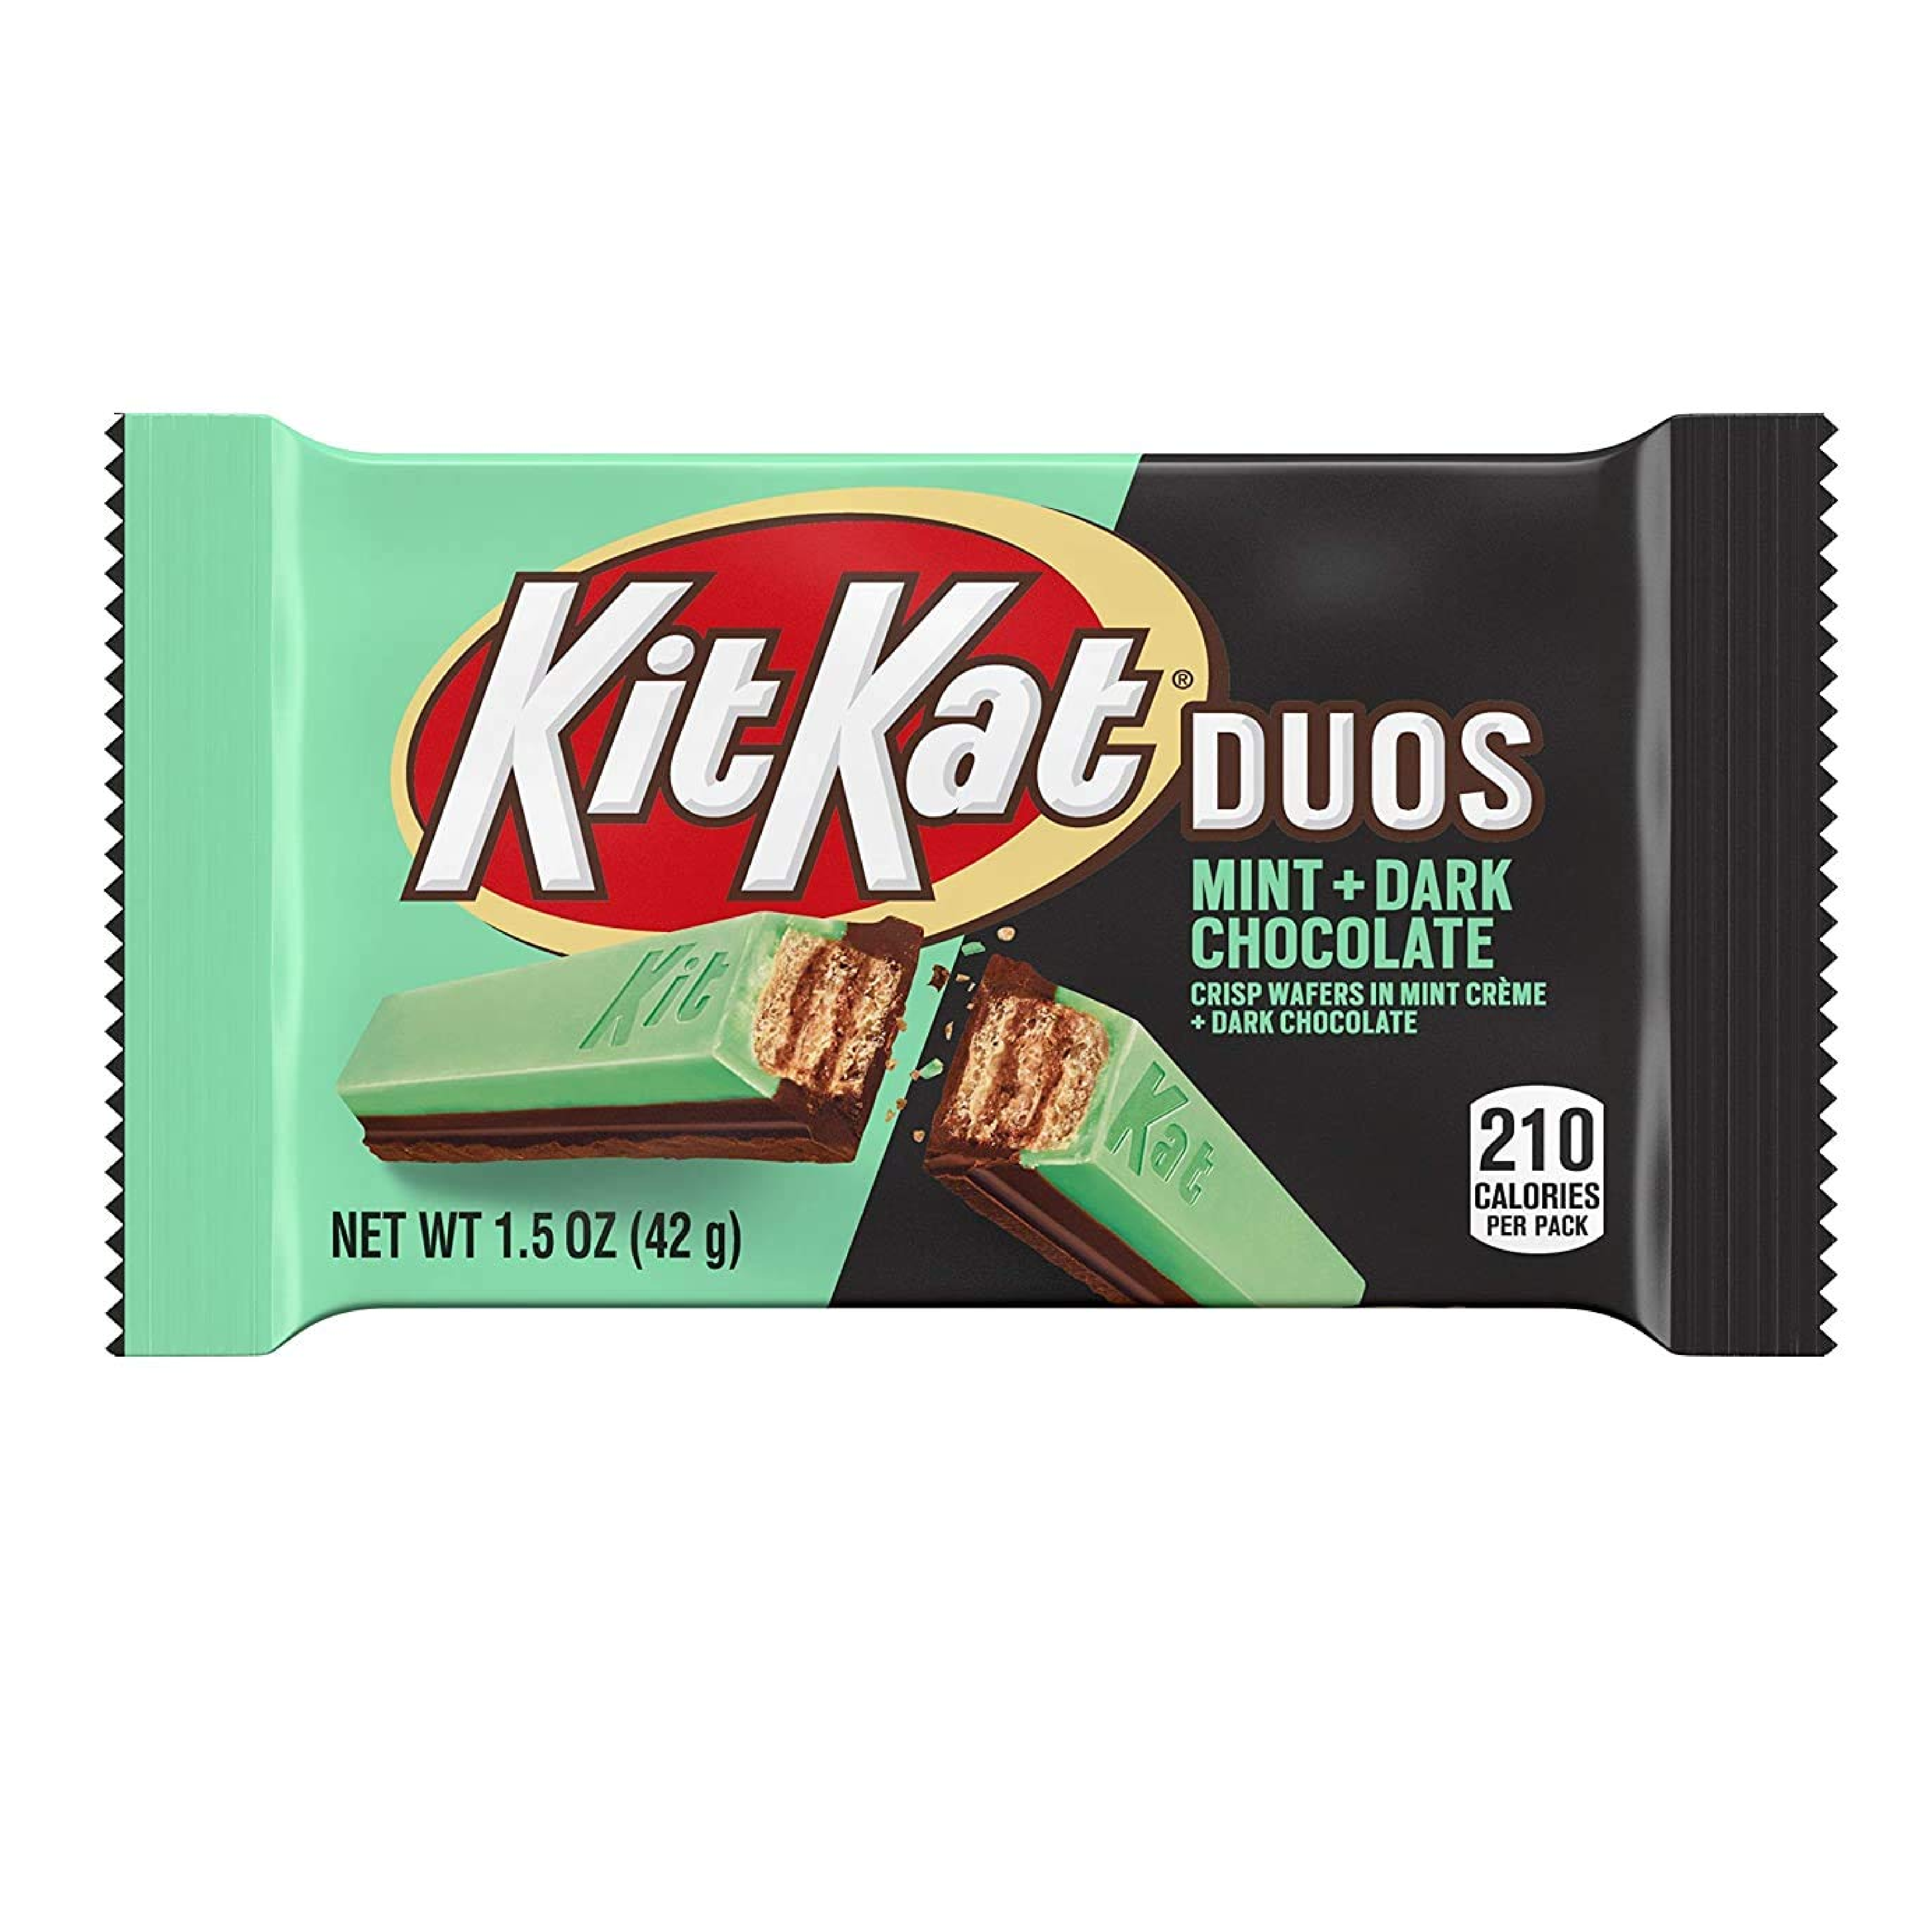 Kit Kat Duos Mint + Dark Chocolate Crisp Wafers 1.5oz